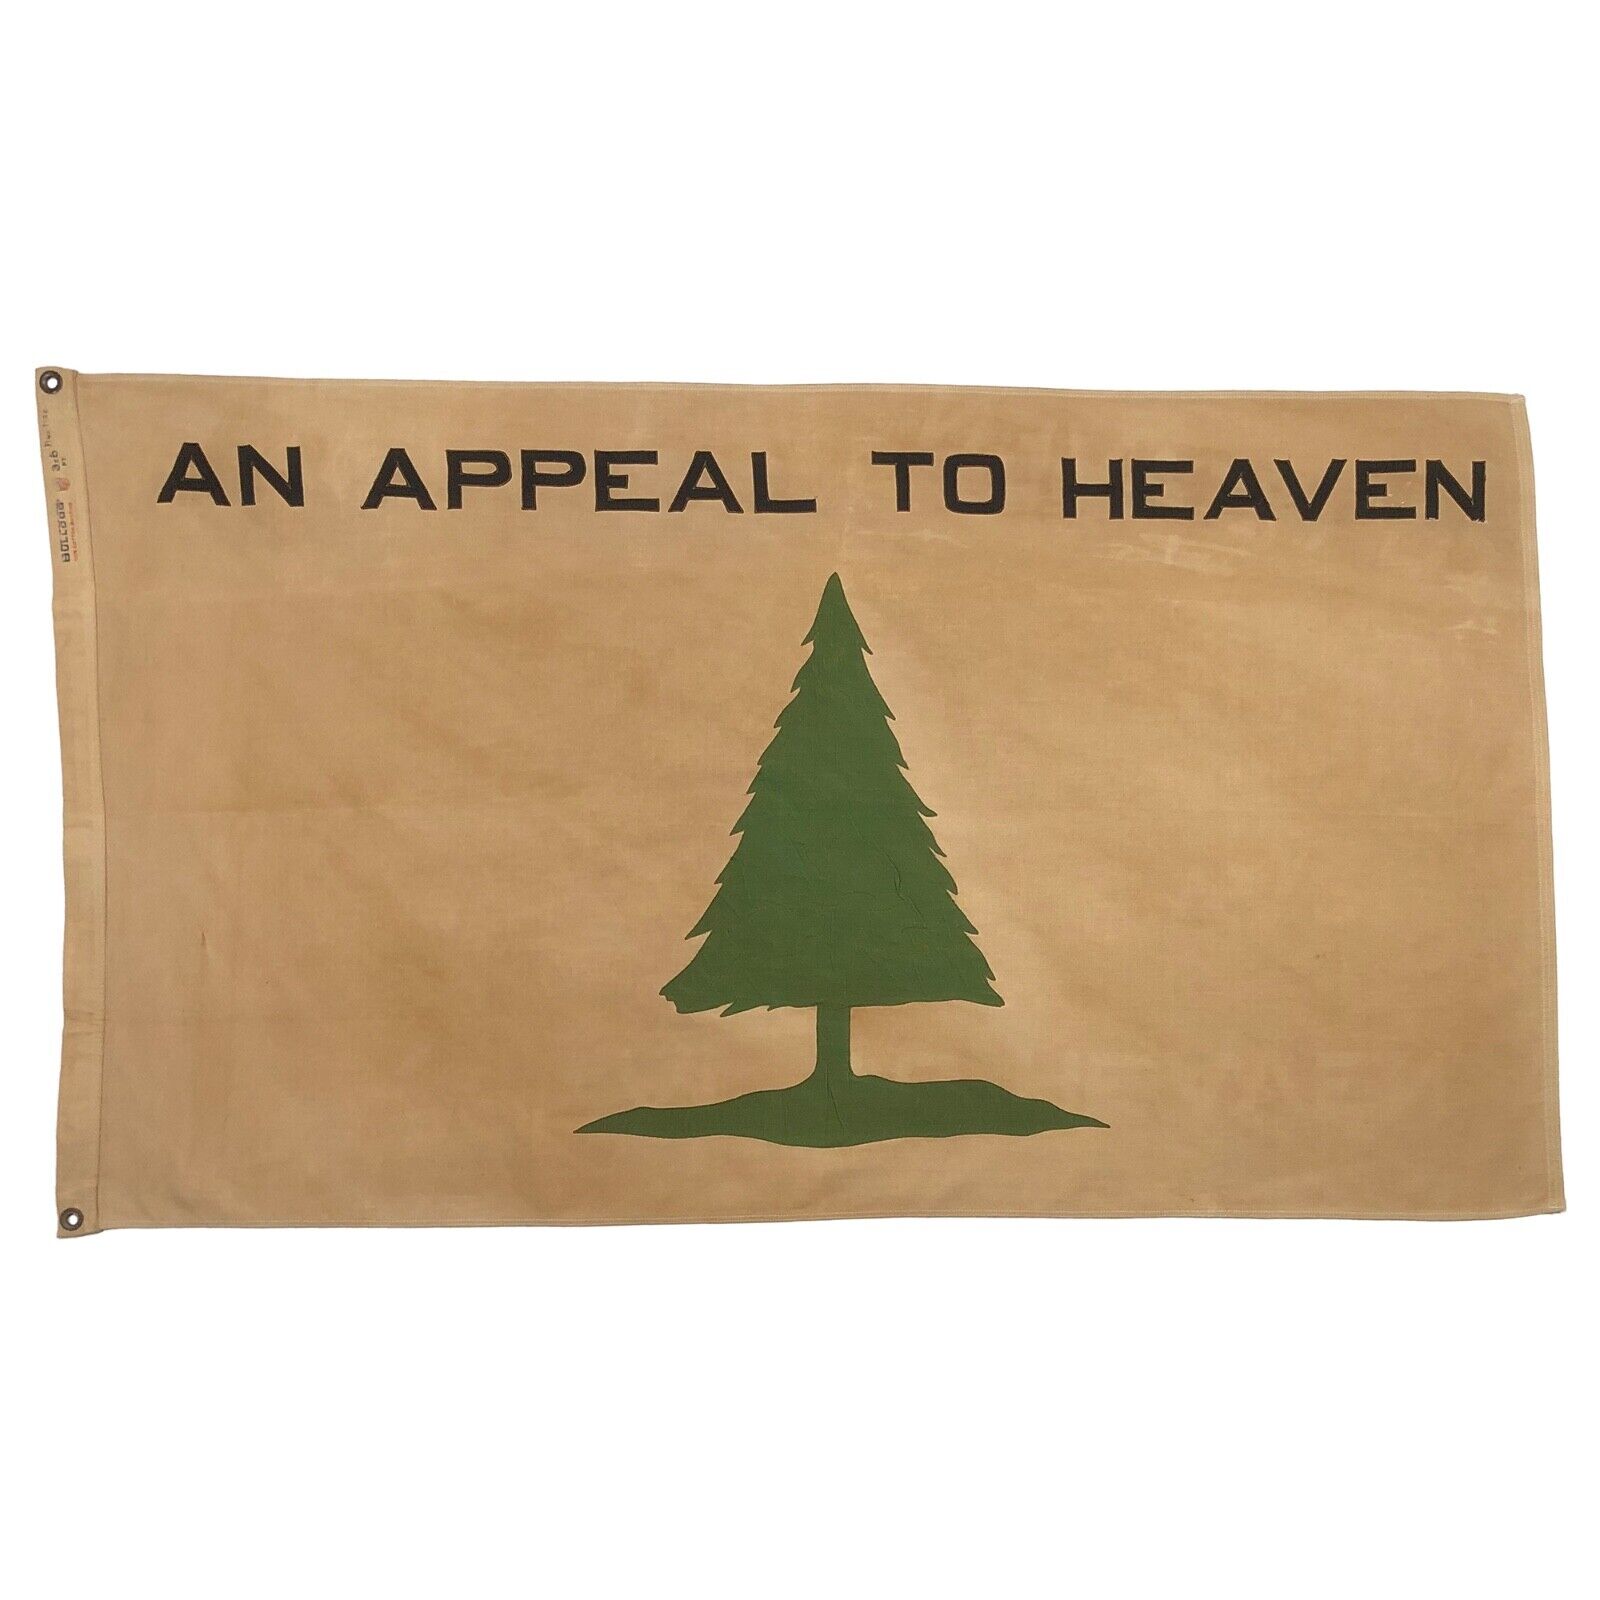 Vintage Cotton Sewn Flag American Pine Tree Appeal to Heaven Washington Cruisers